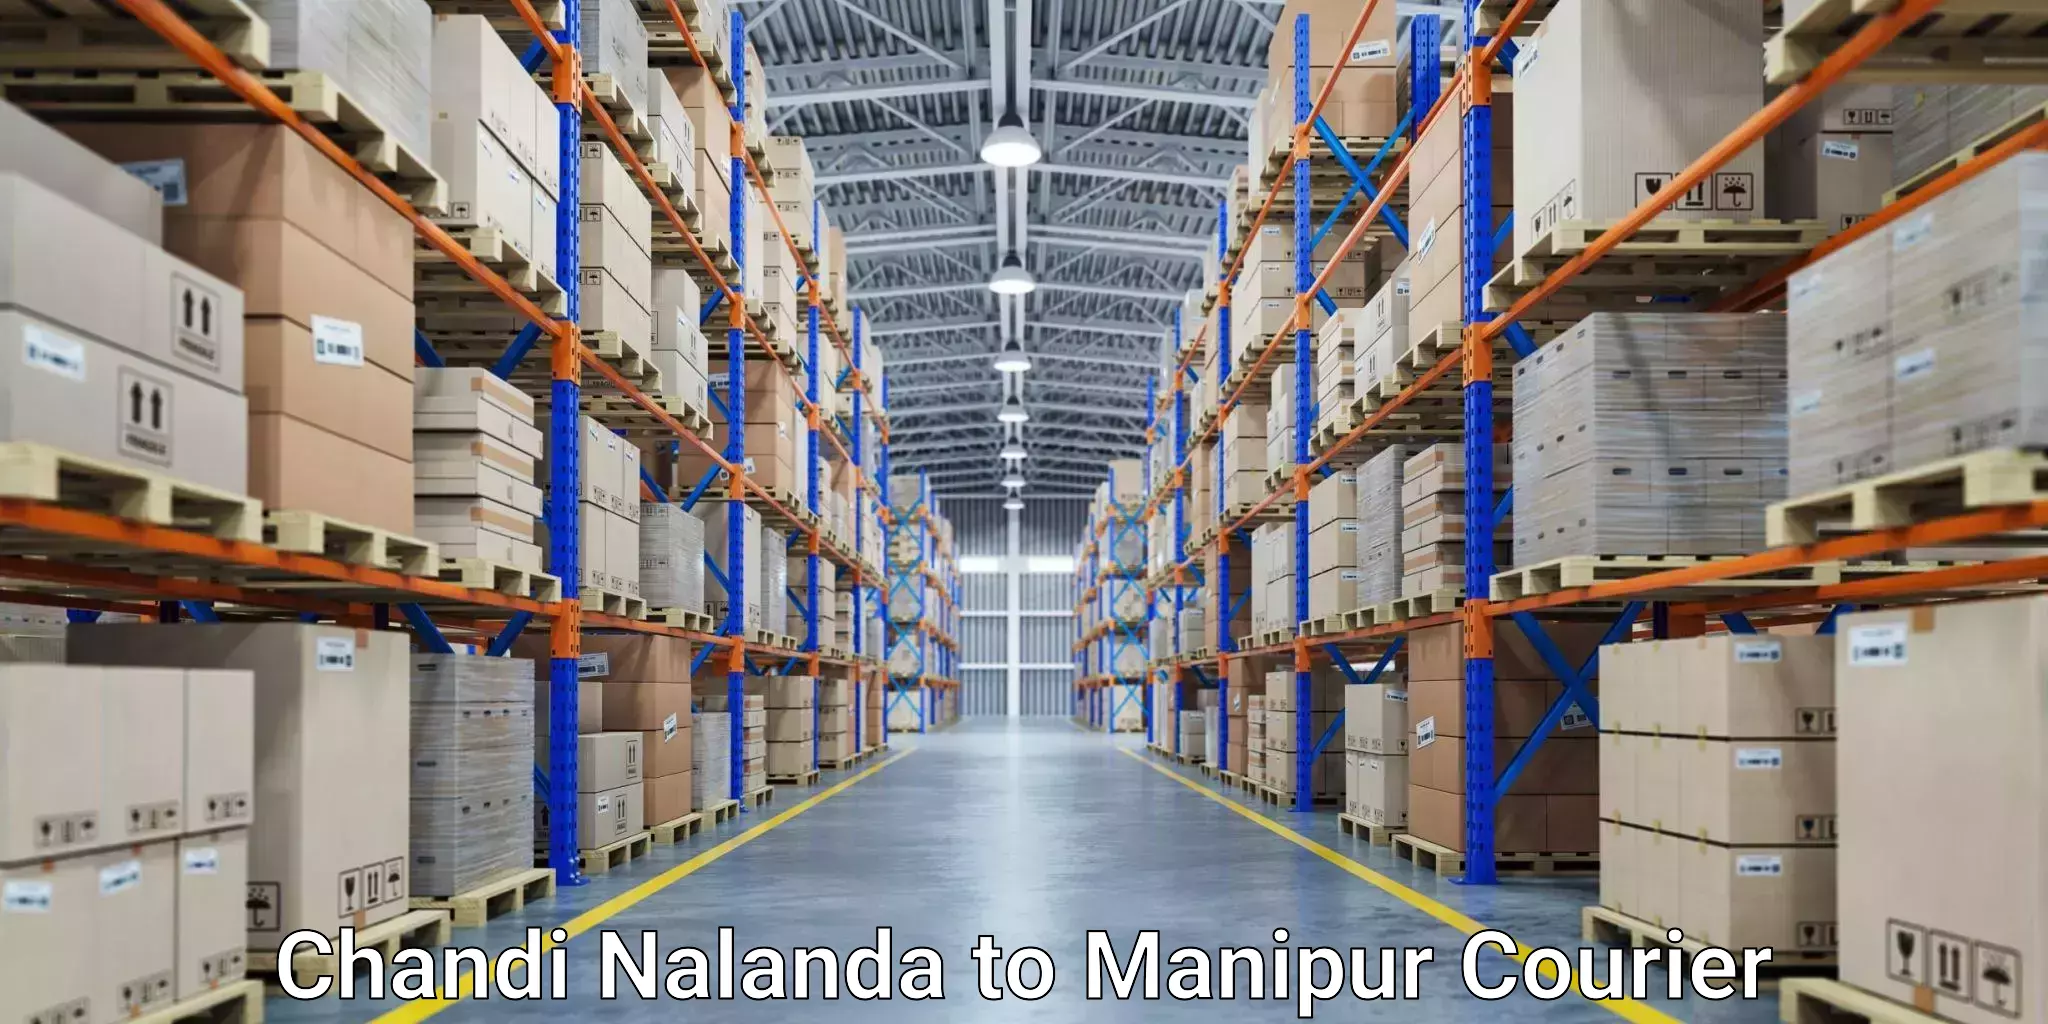 Express delivery capabilities Chandi Nalanda to Manipur